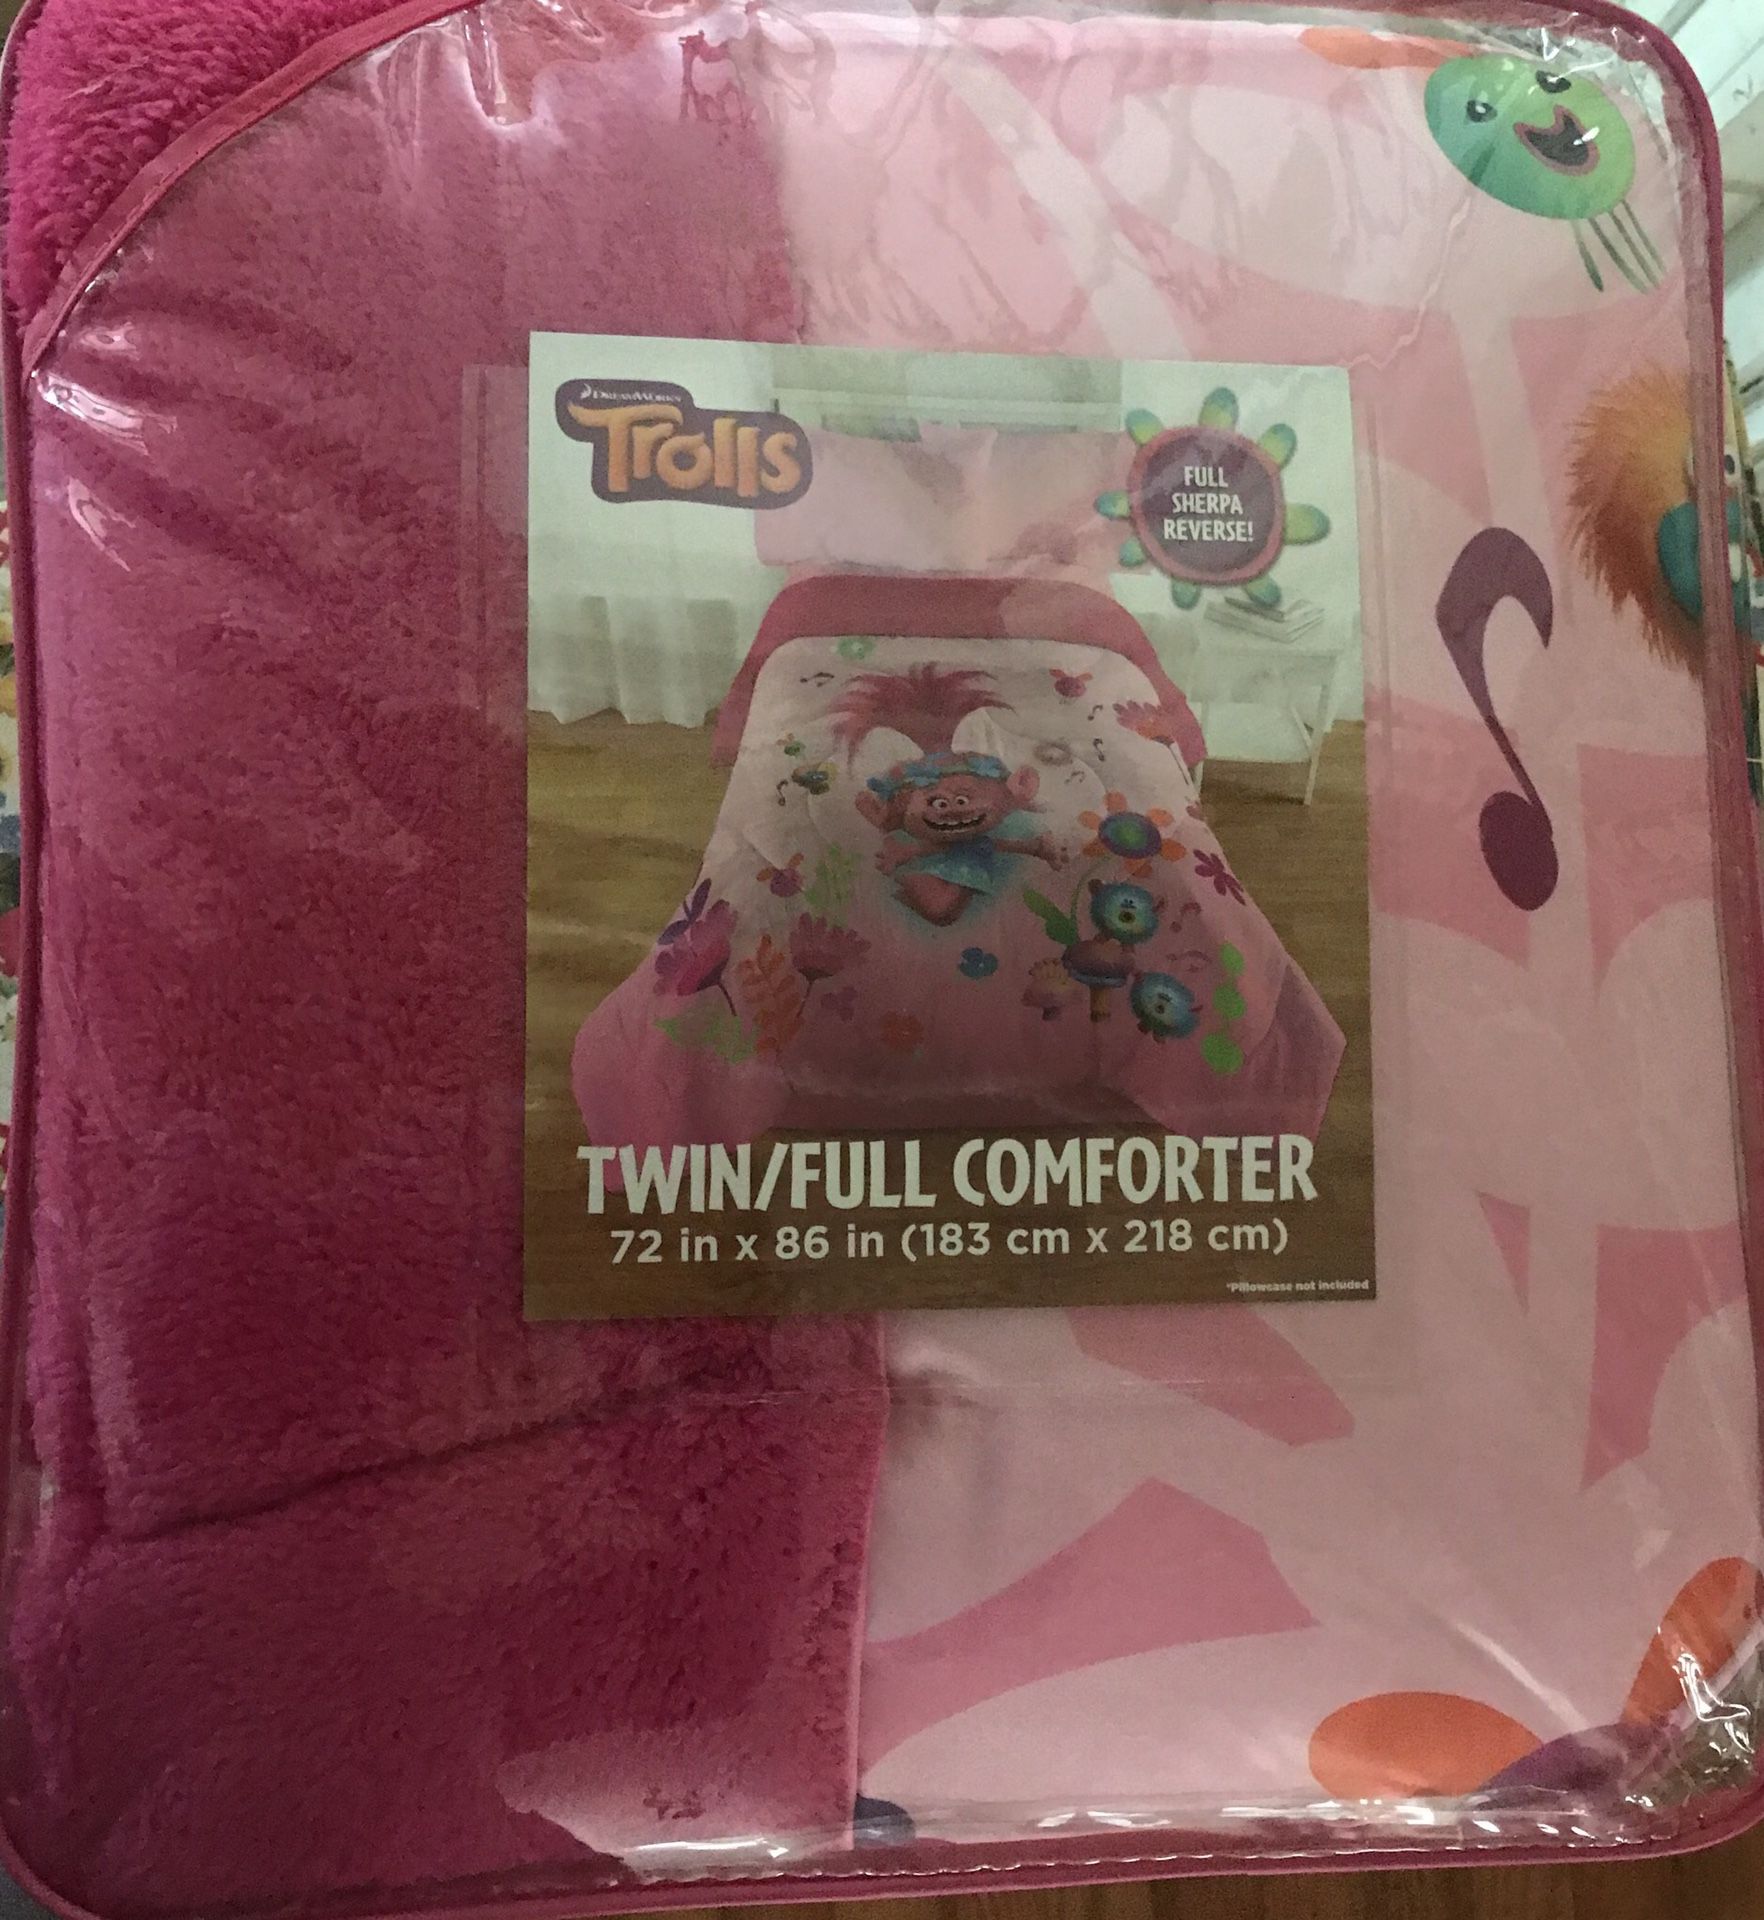 TROLLS TWIN/FULL COMFORTER